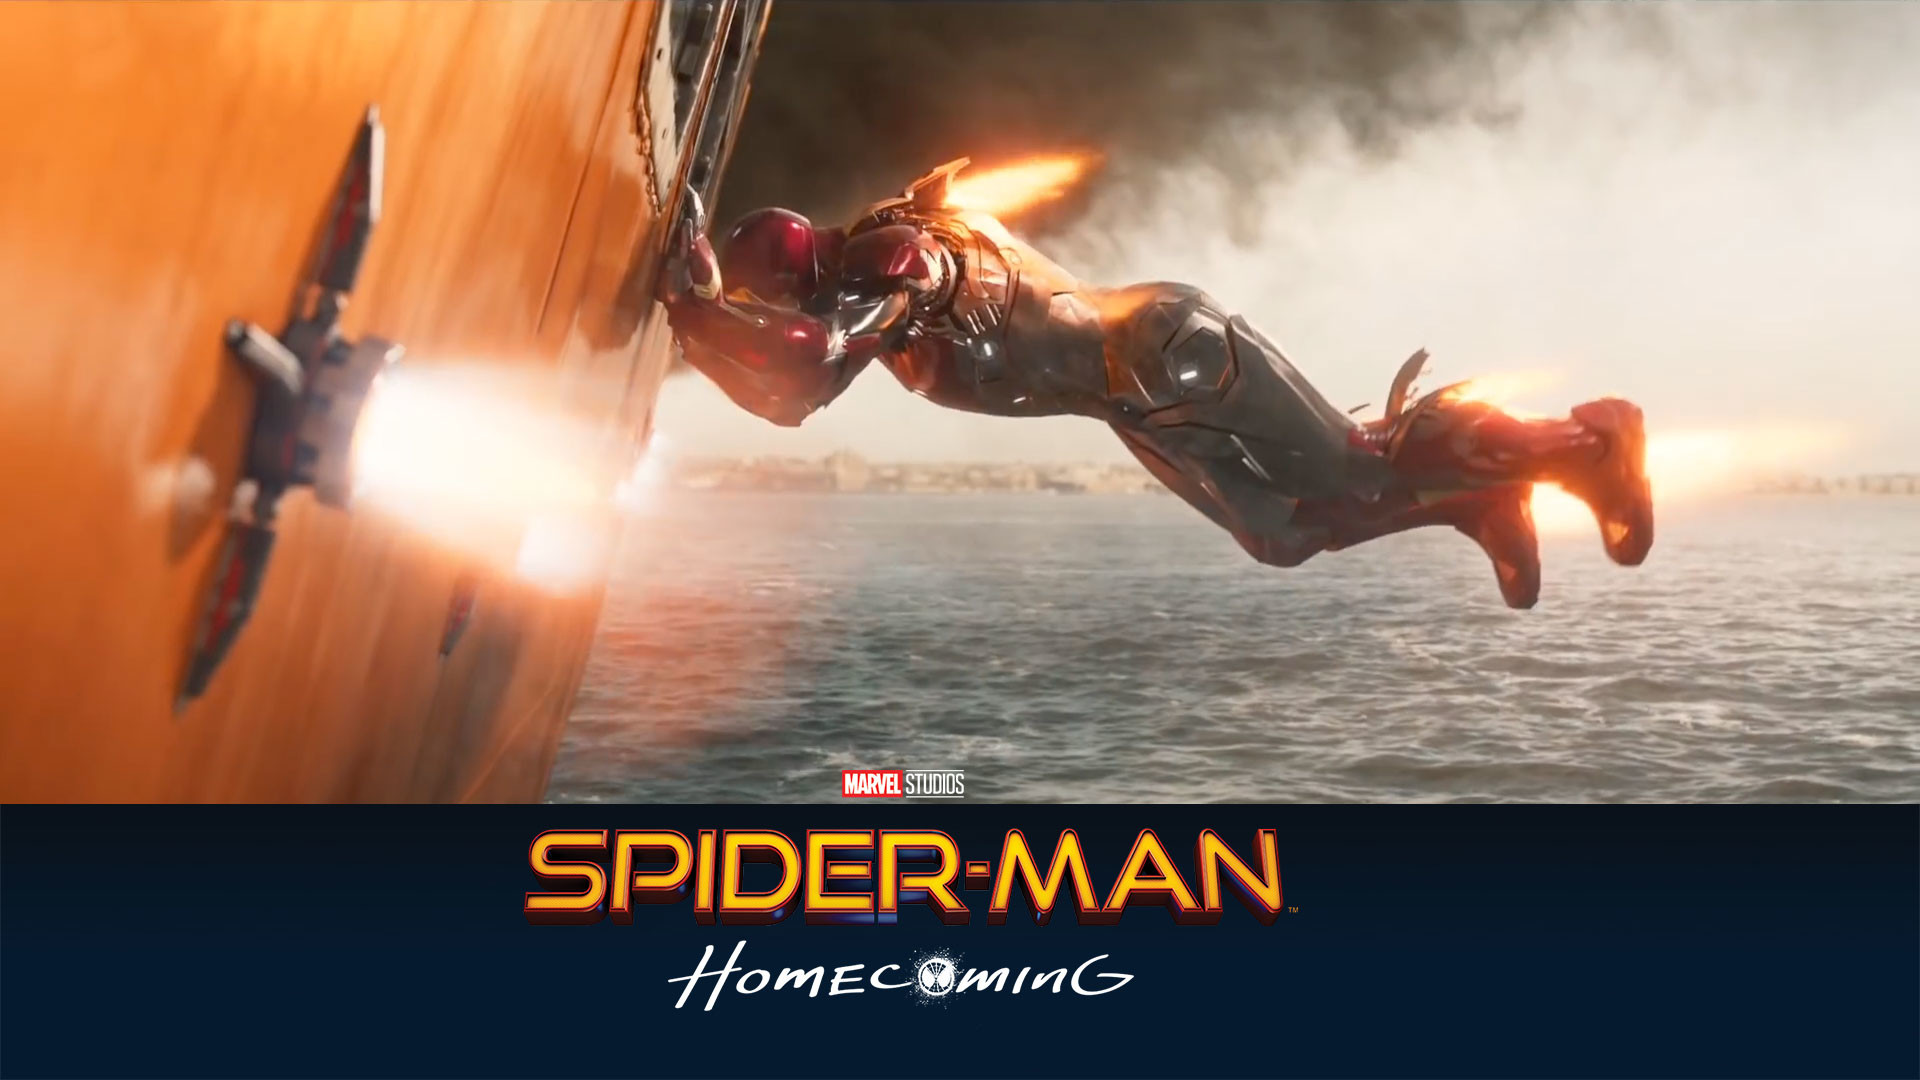 1920x1080 Spider-Man Homecoming Wallpaper of Iron-man